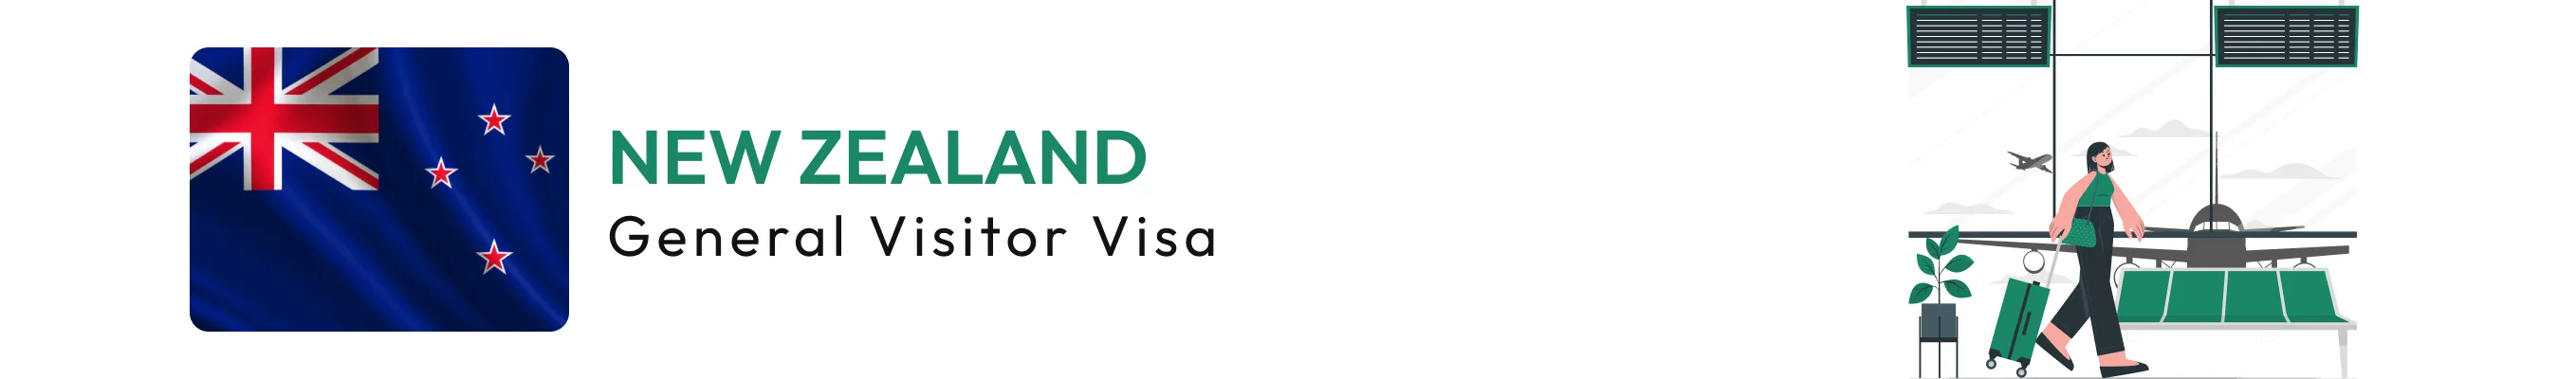 new-zealand-general-visitor-visa.webp